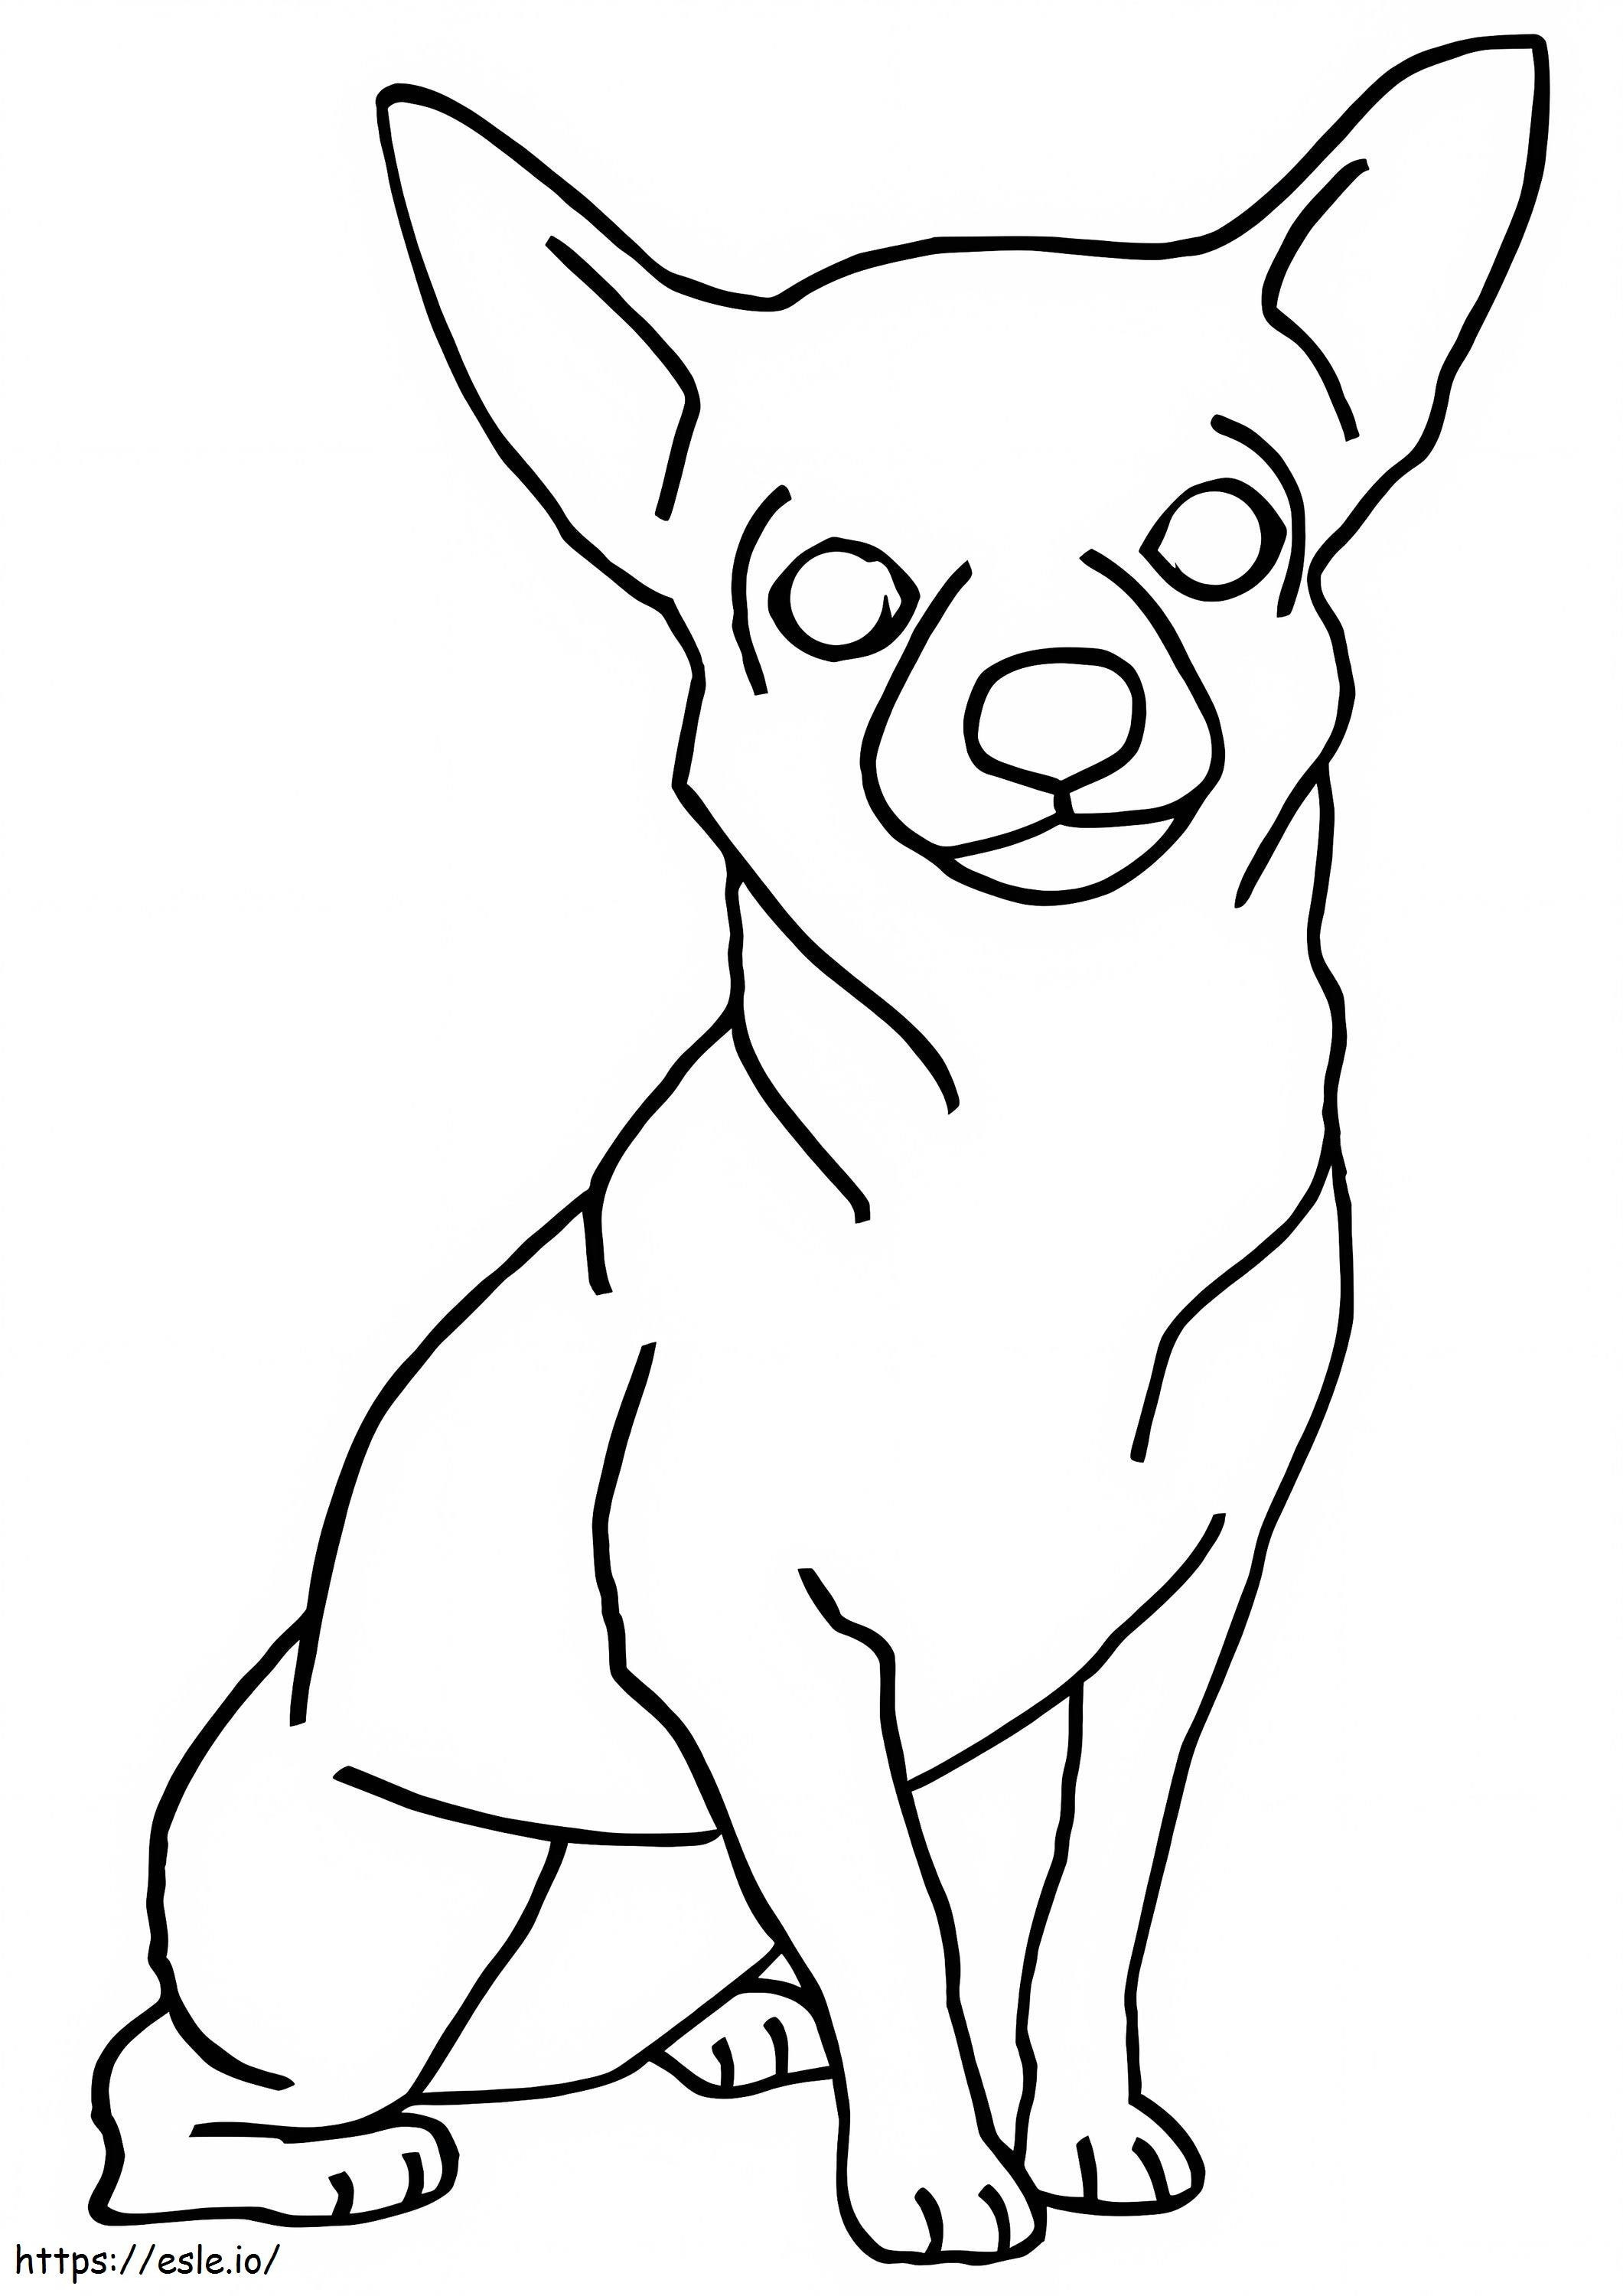 Coloriage Chihuahua simple à imprimer dessin